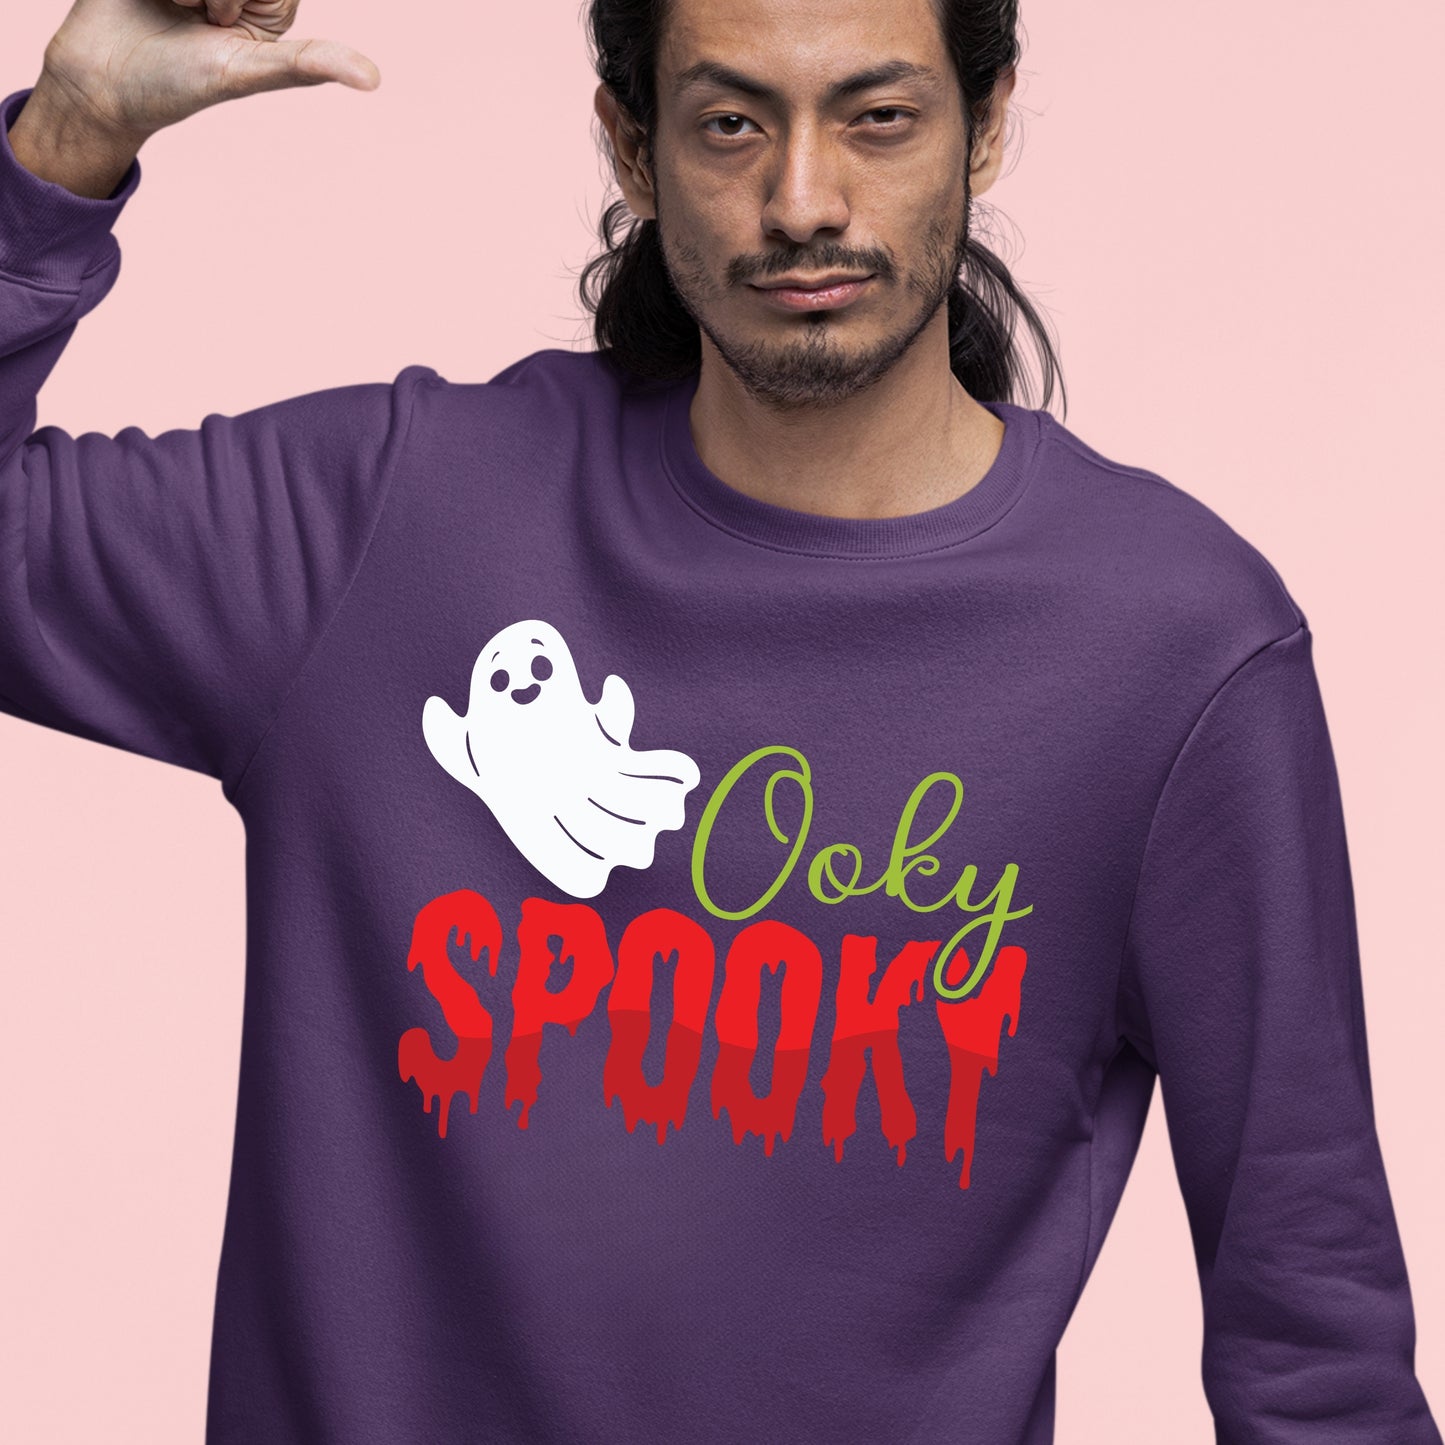 Spooky Halloween Sweatshirt, Halloween Gift Sweatshirt, Halloween Sweater, Cute Halloween Sweatshirt, Funny Halloween Sweatshirt